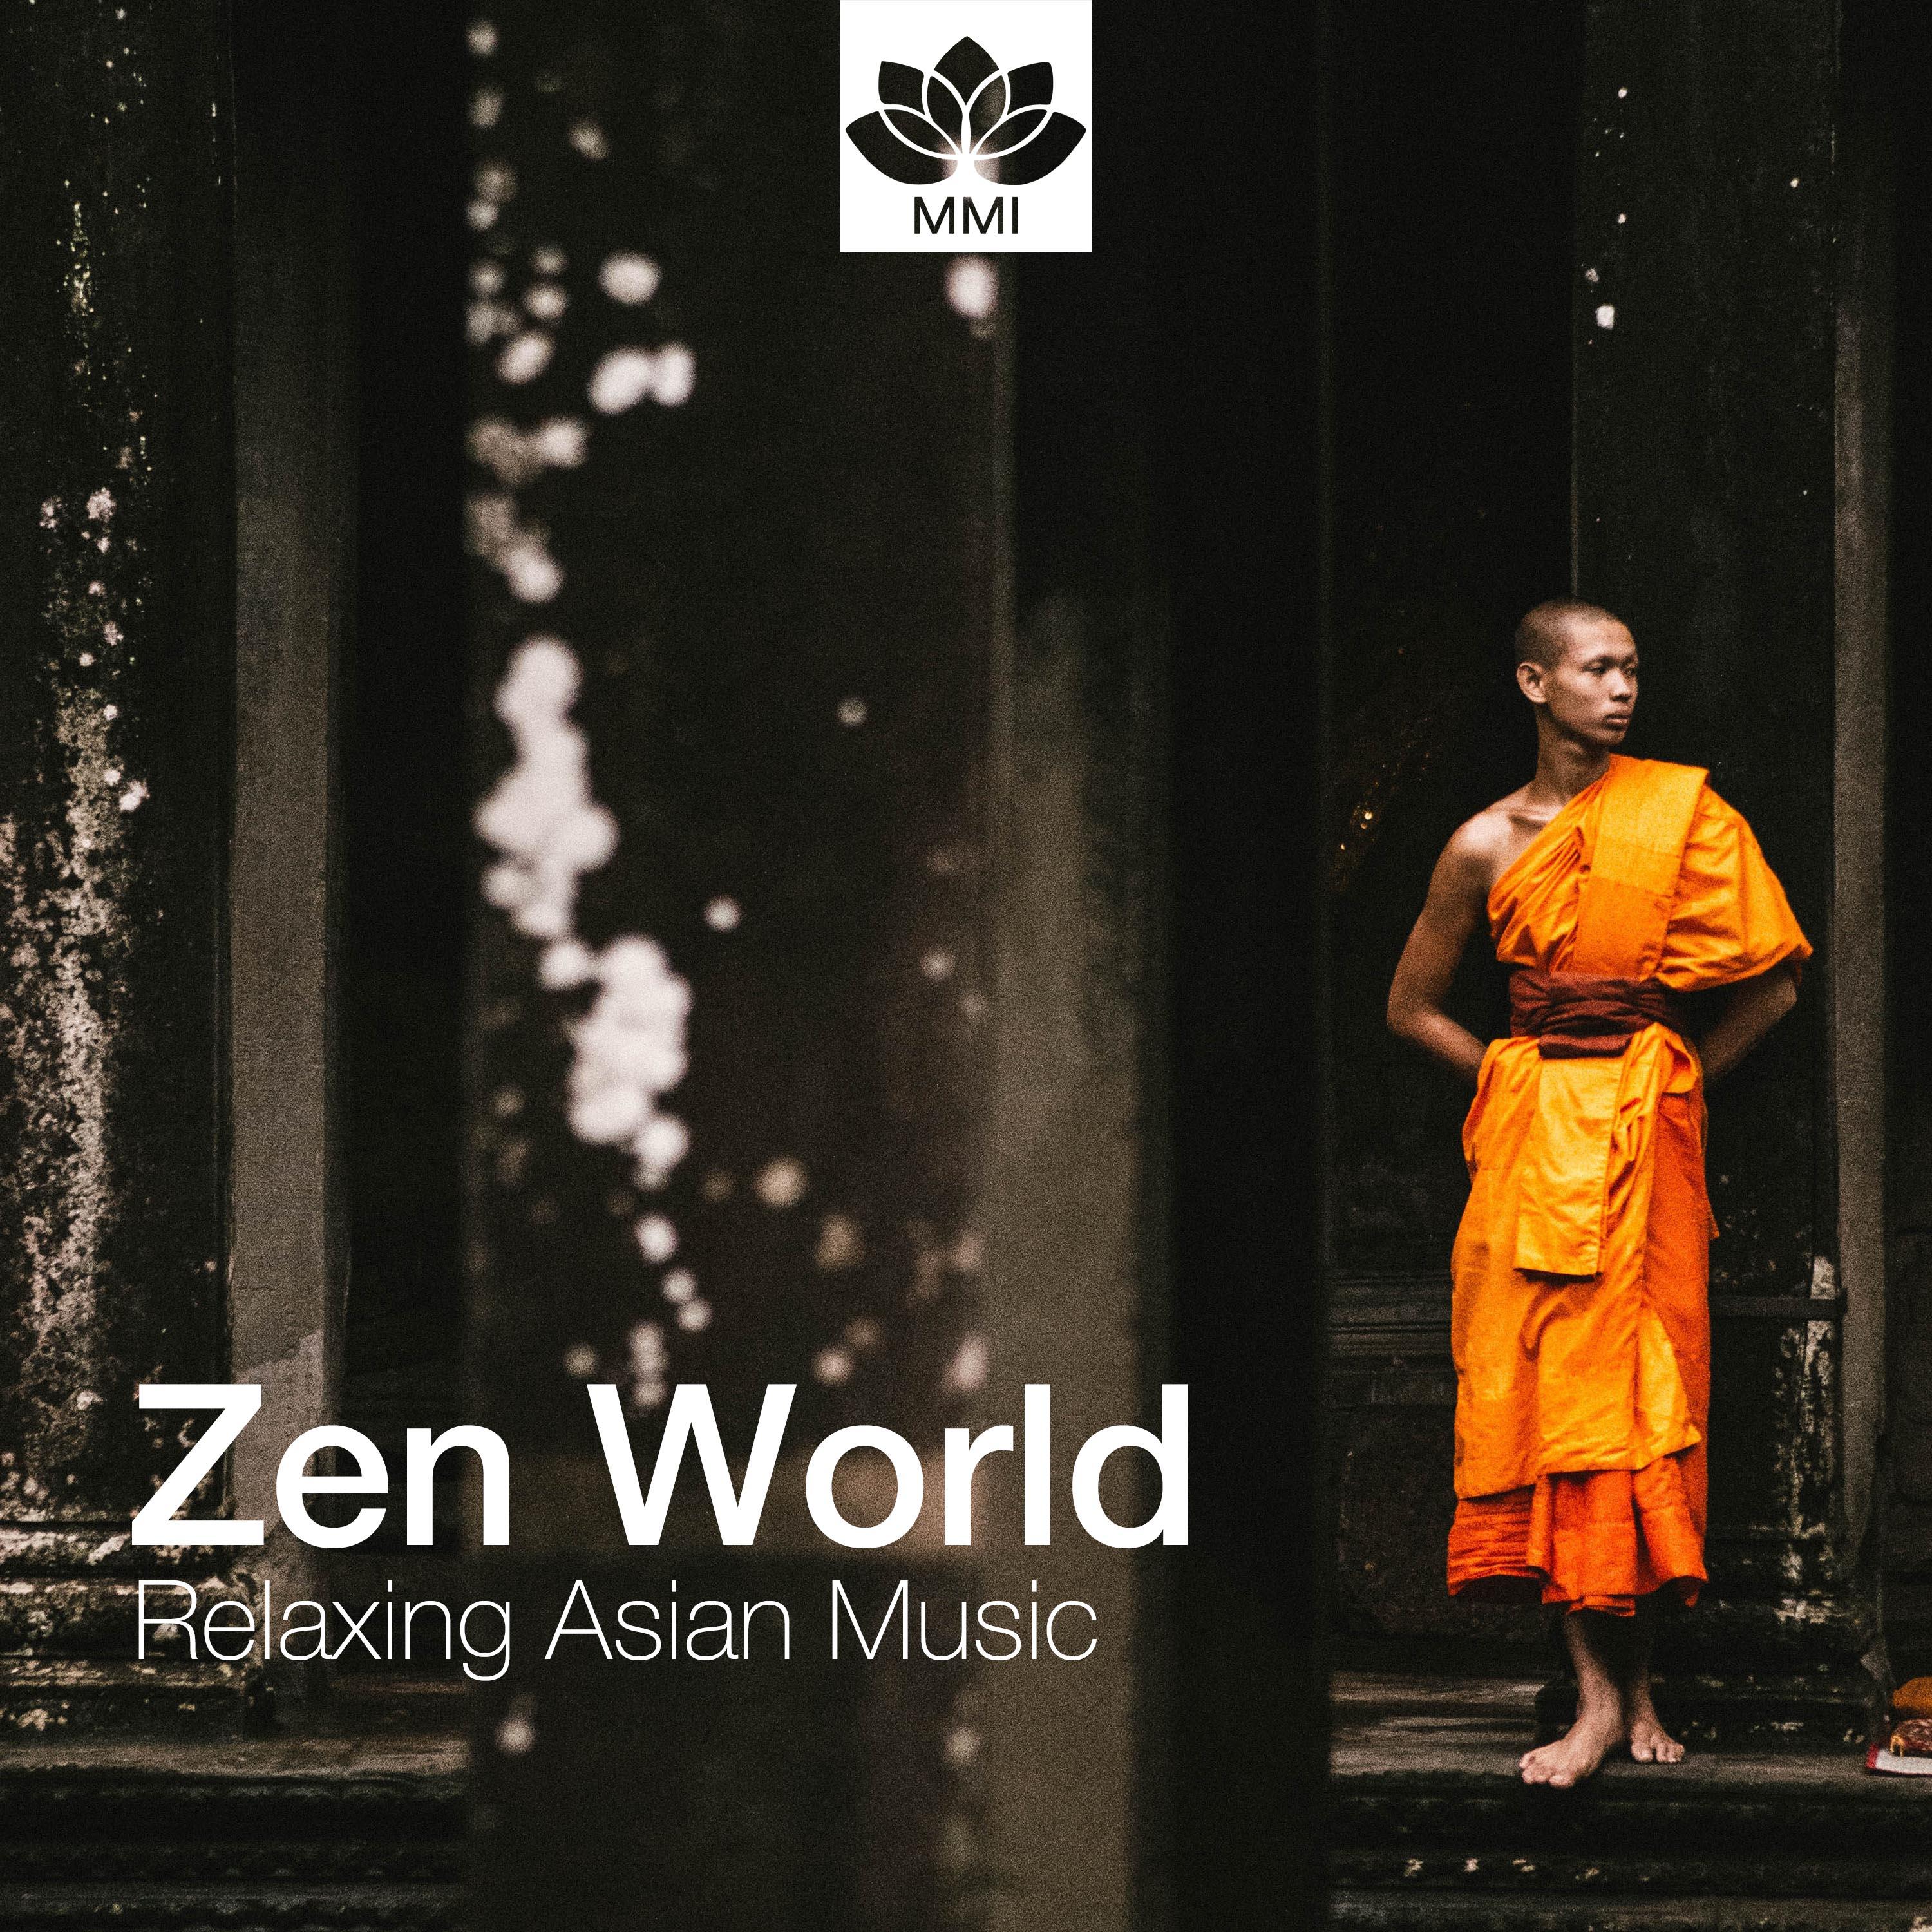 Zen World - Relaxing Asian Music, Nature Sounds, Flute, Guitar, Ocean Waves and Piano